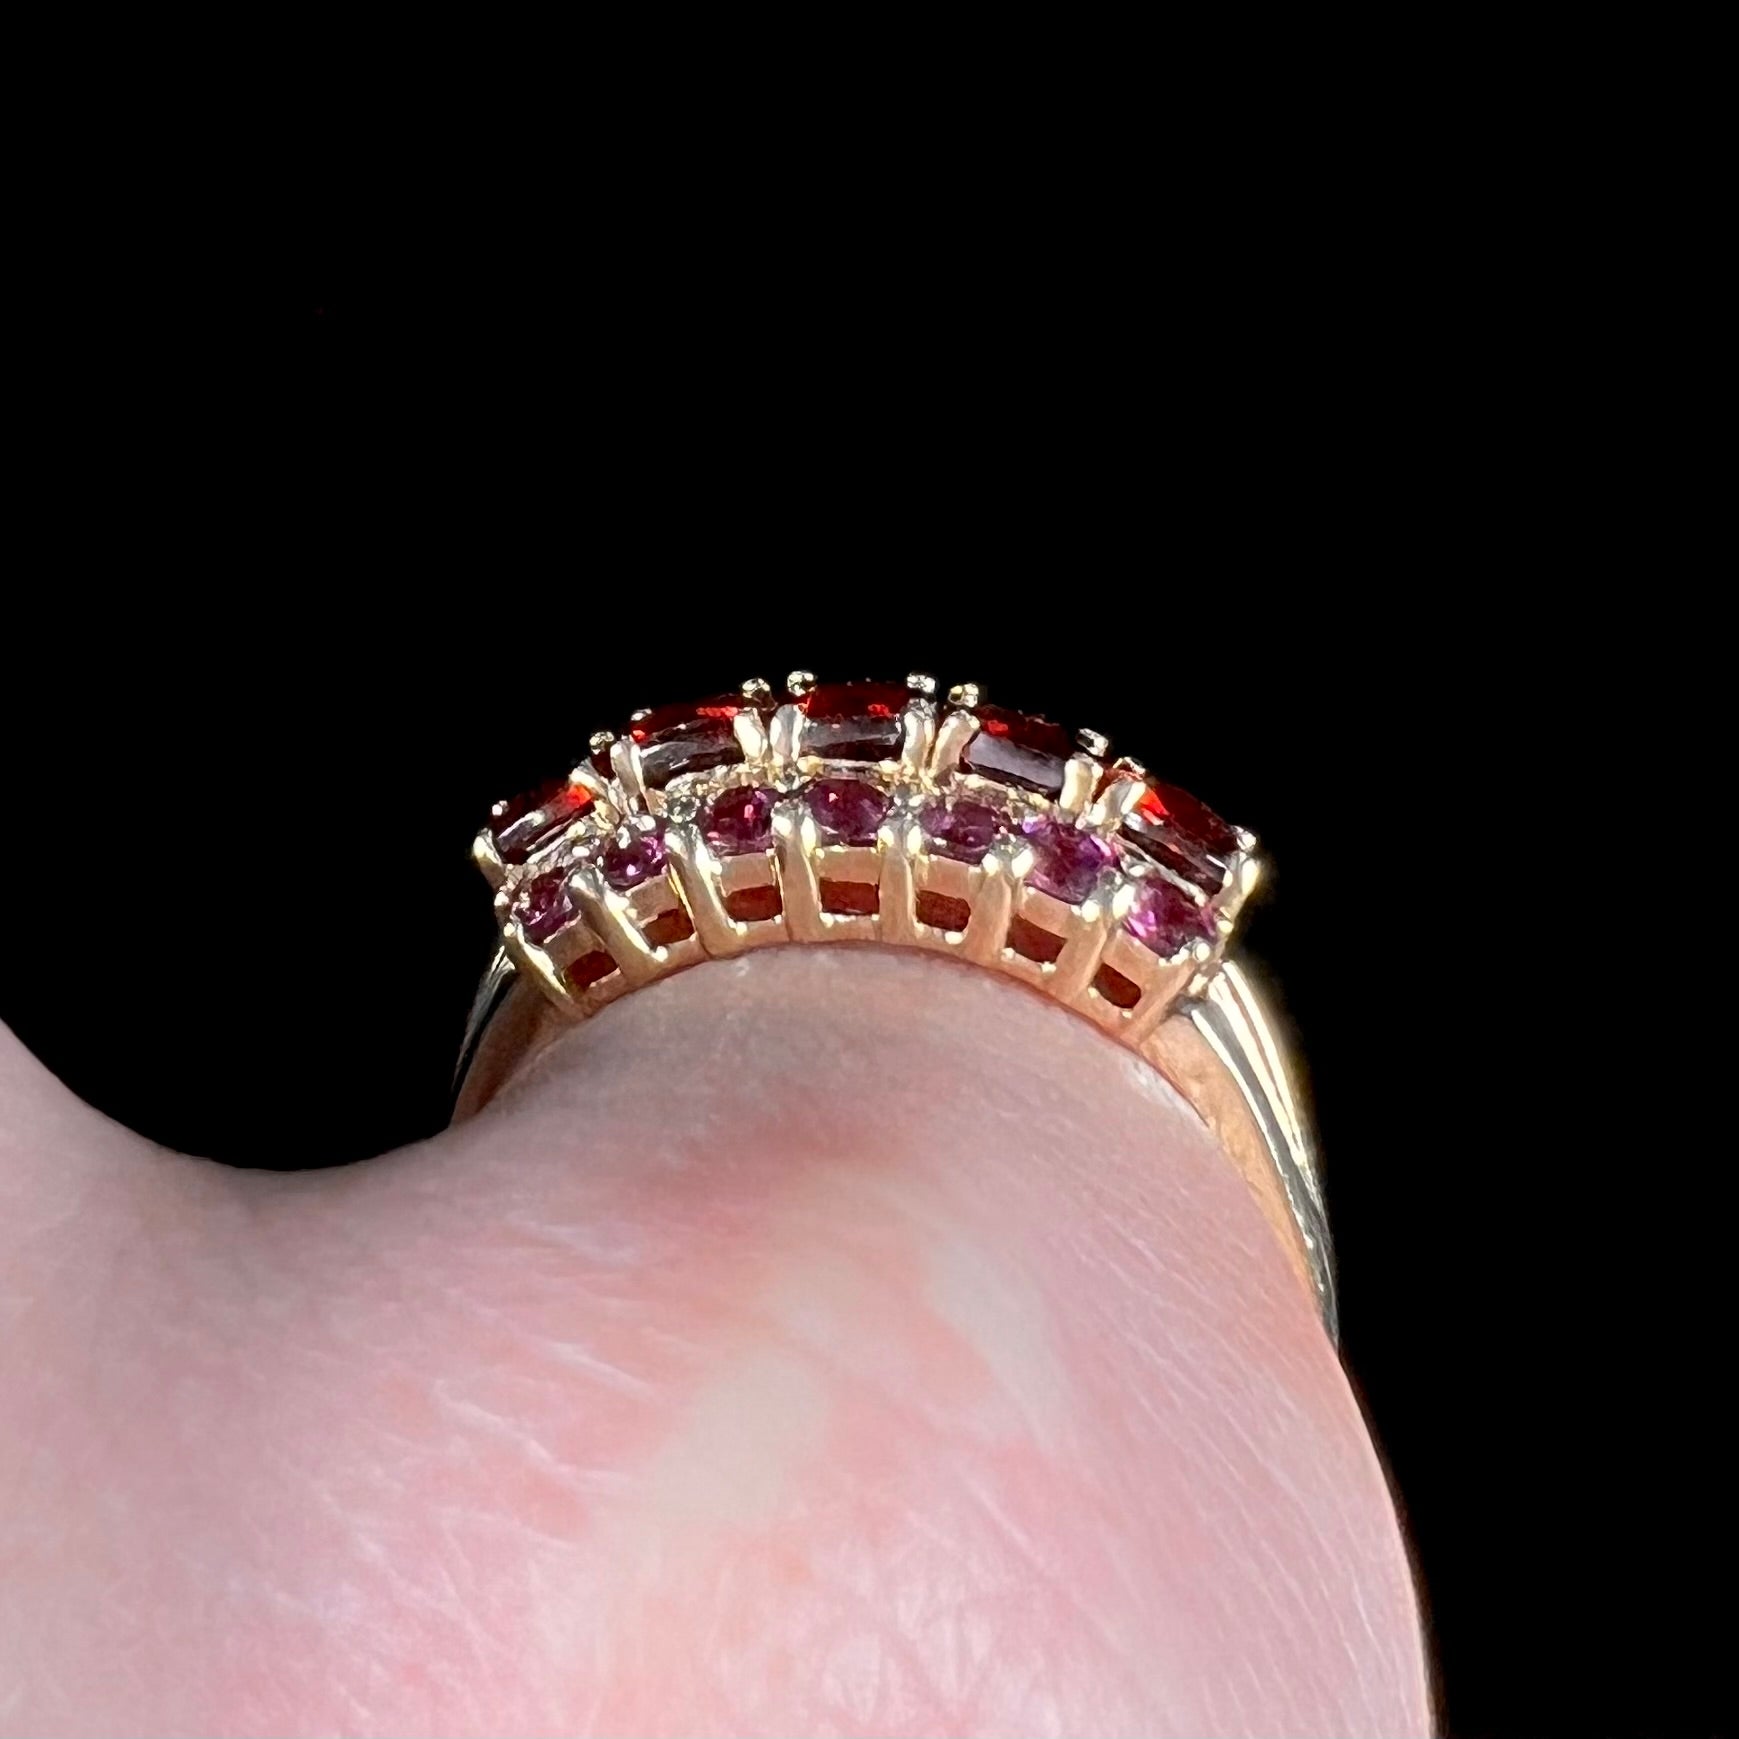 A gold ring set with buff cut cushion shaped almandine garnets with round cut purple rhodolite garnet accents.